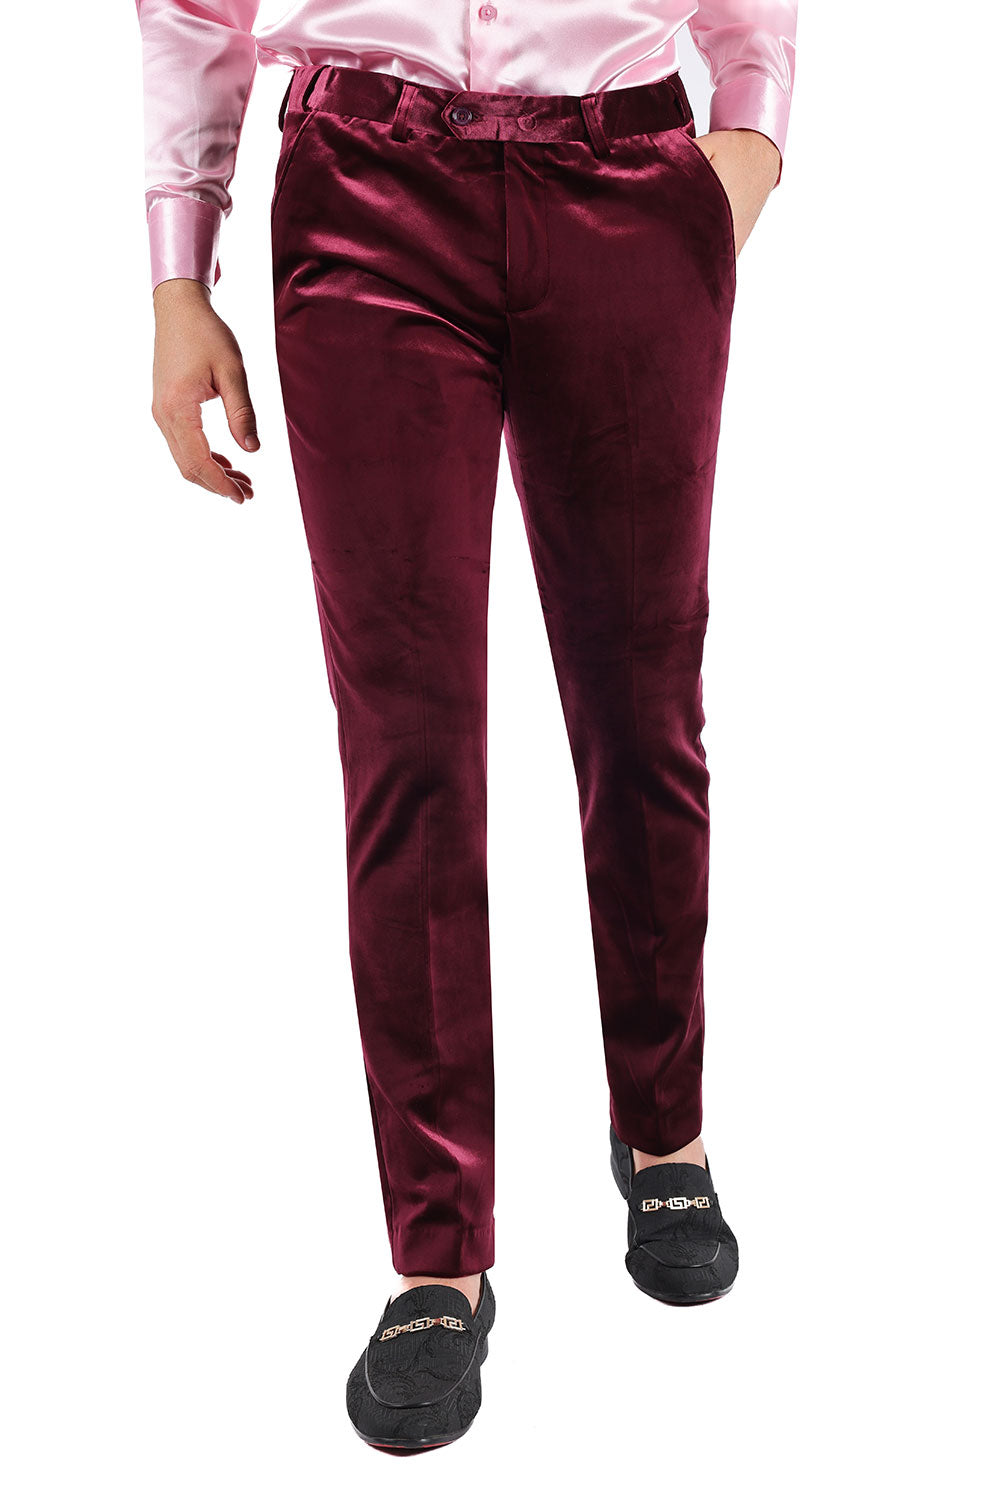 Barabas Men's Velvet Shiny Chino Solid Color Dress Pants 3CP06 Wine